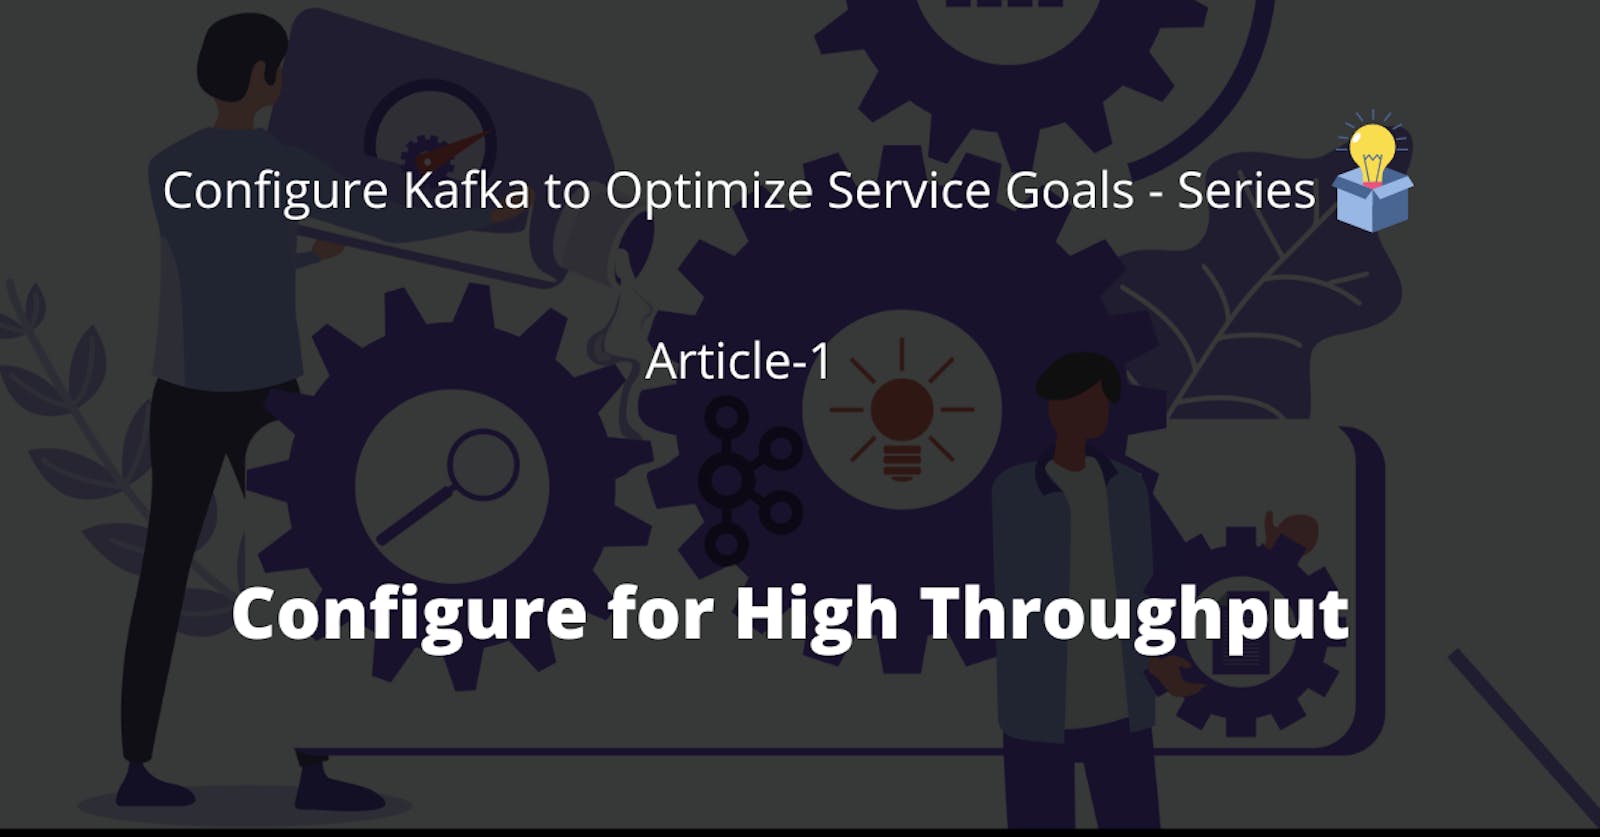 Configure Kafka for High Throughput